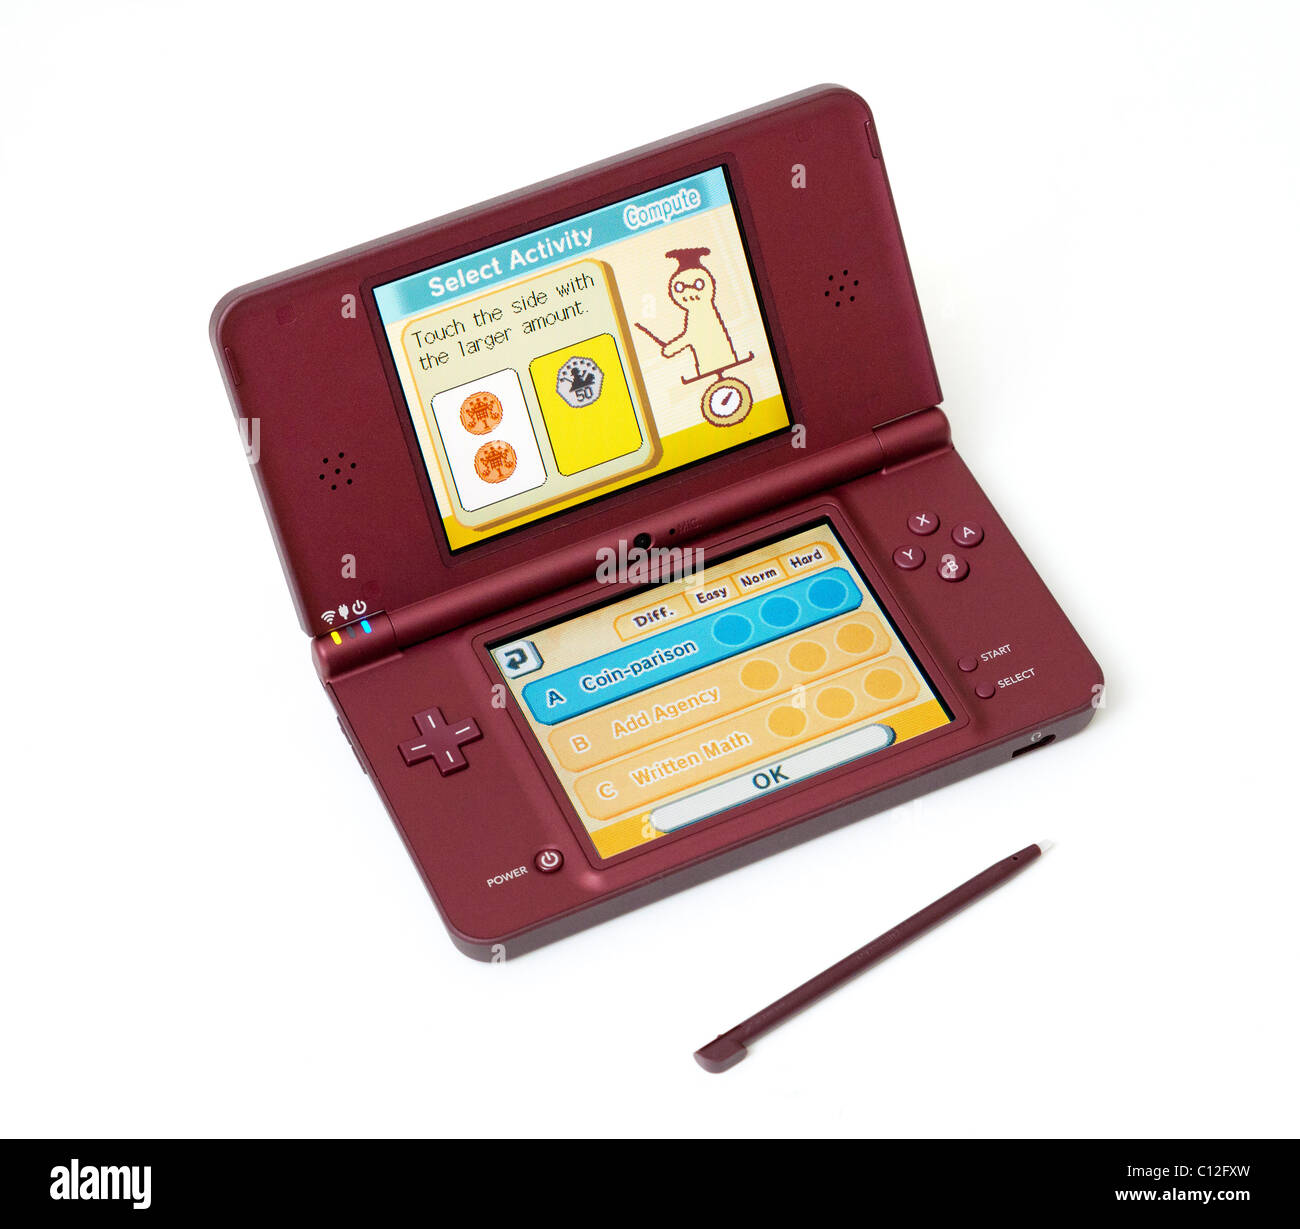 Nintendo DSi XL games console Stock Photo - Alamy